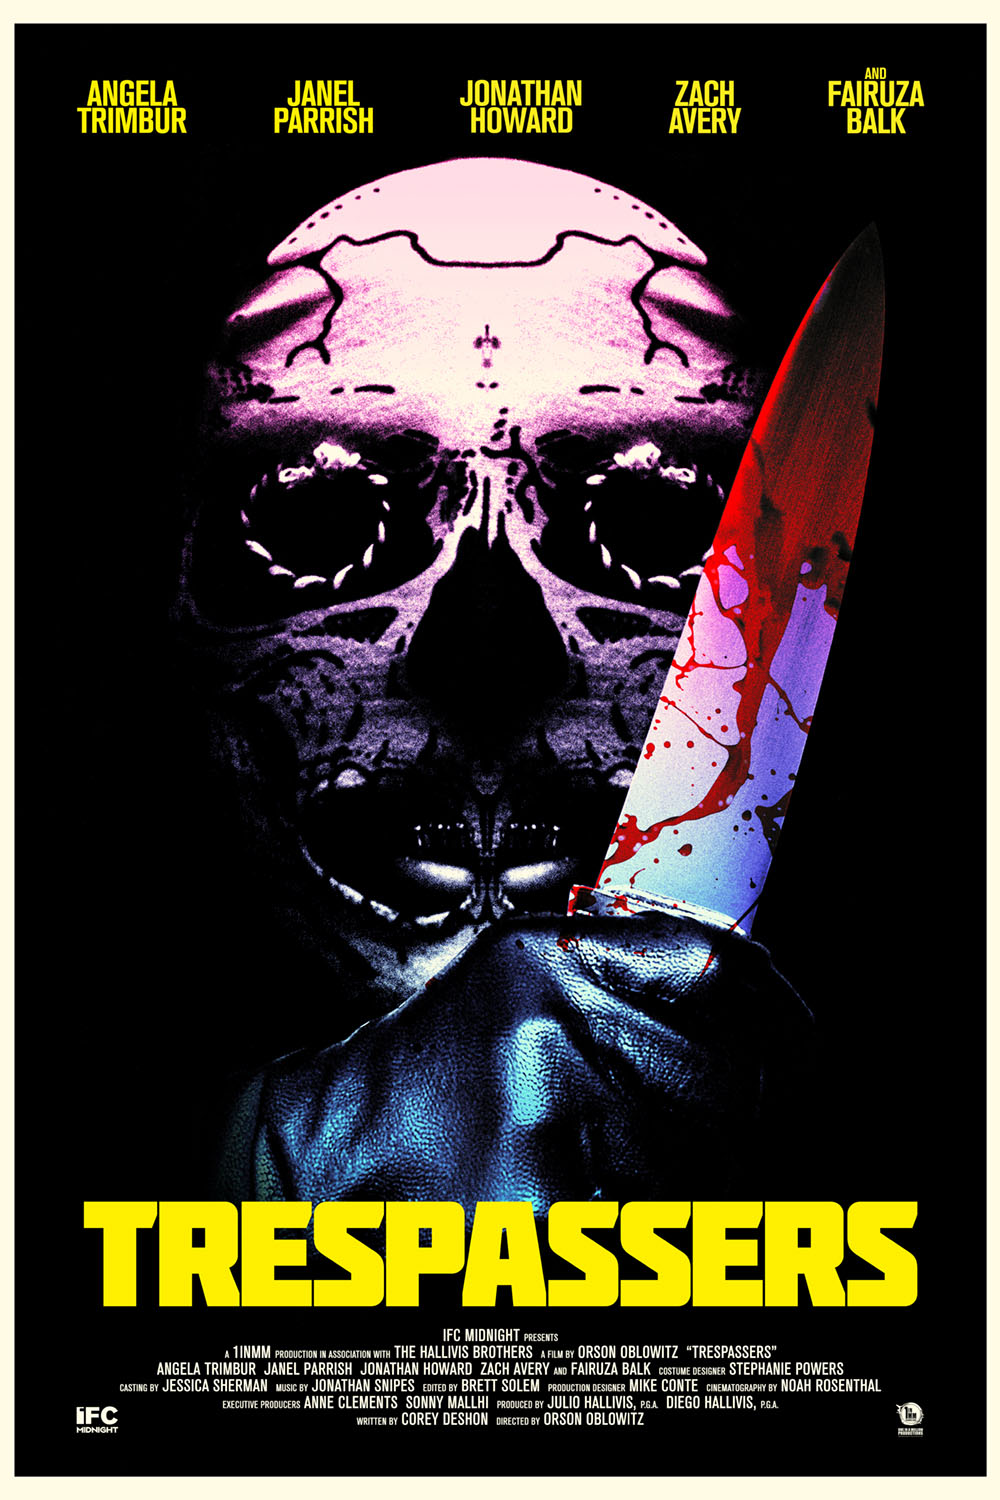 Movie poster for Trespassers, figure in skull mask holding bloody knife